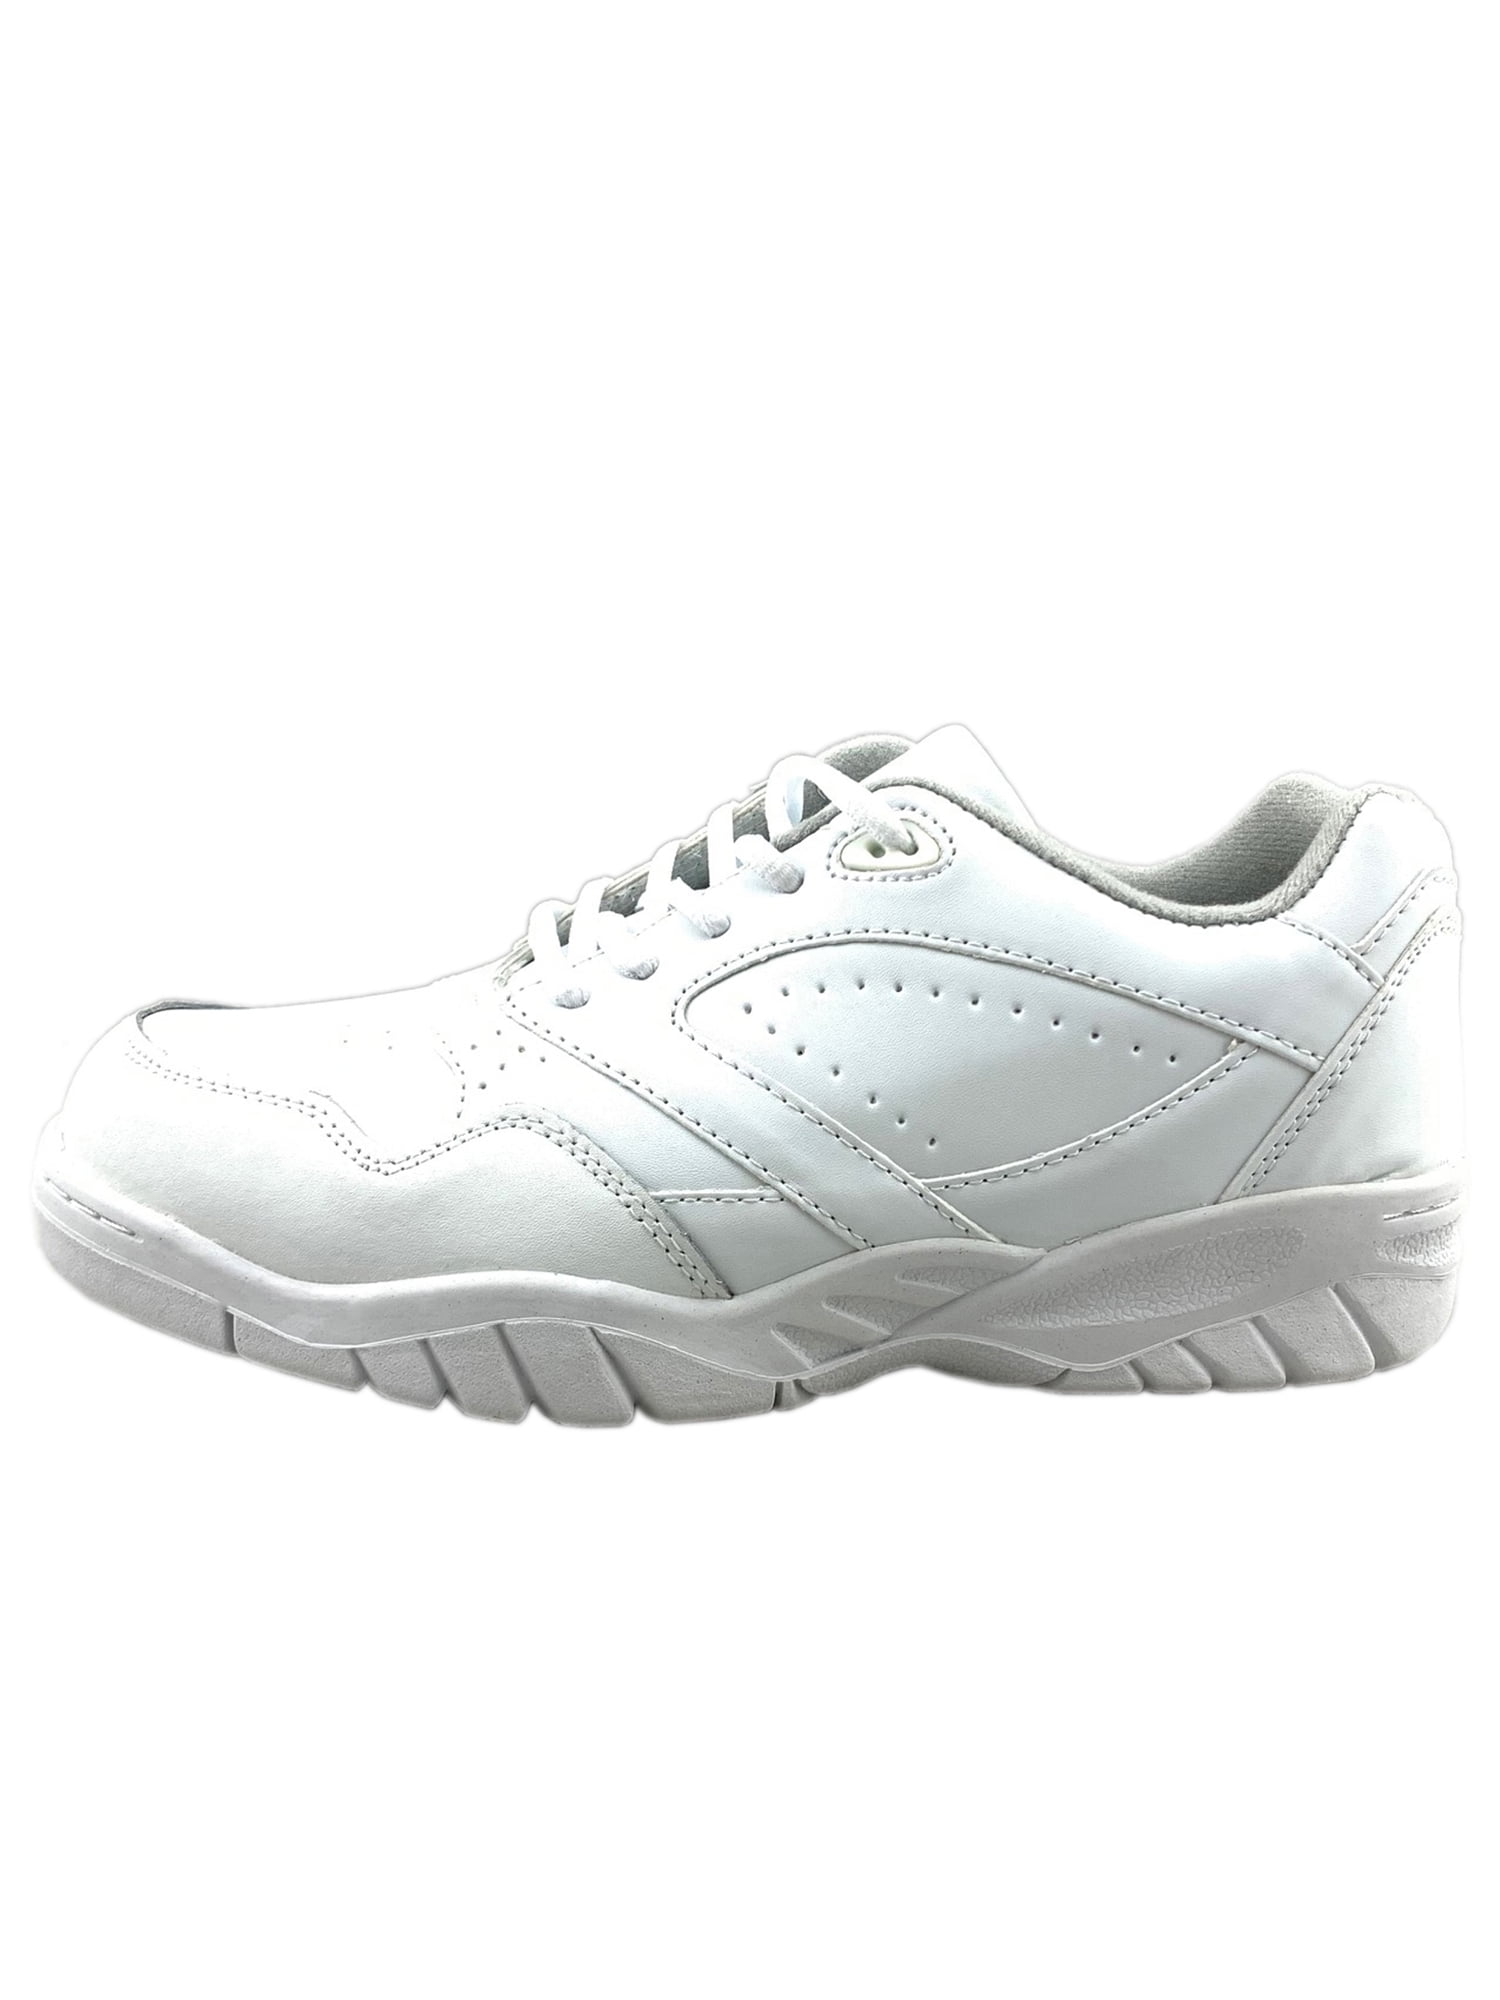 Buy > white non slip shoes walmart > in stock